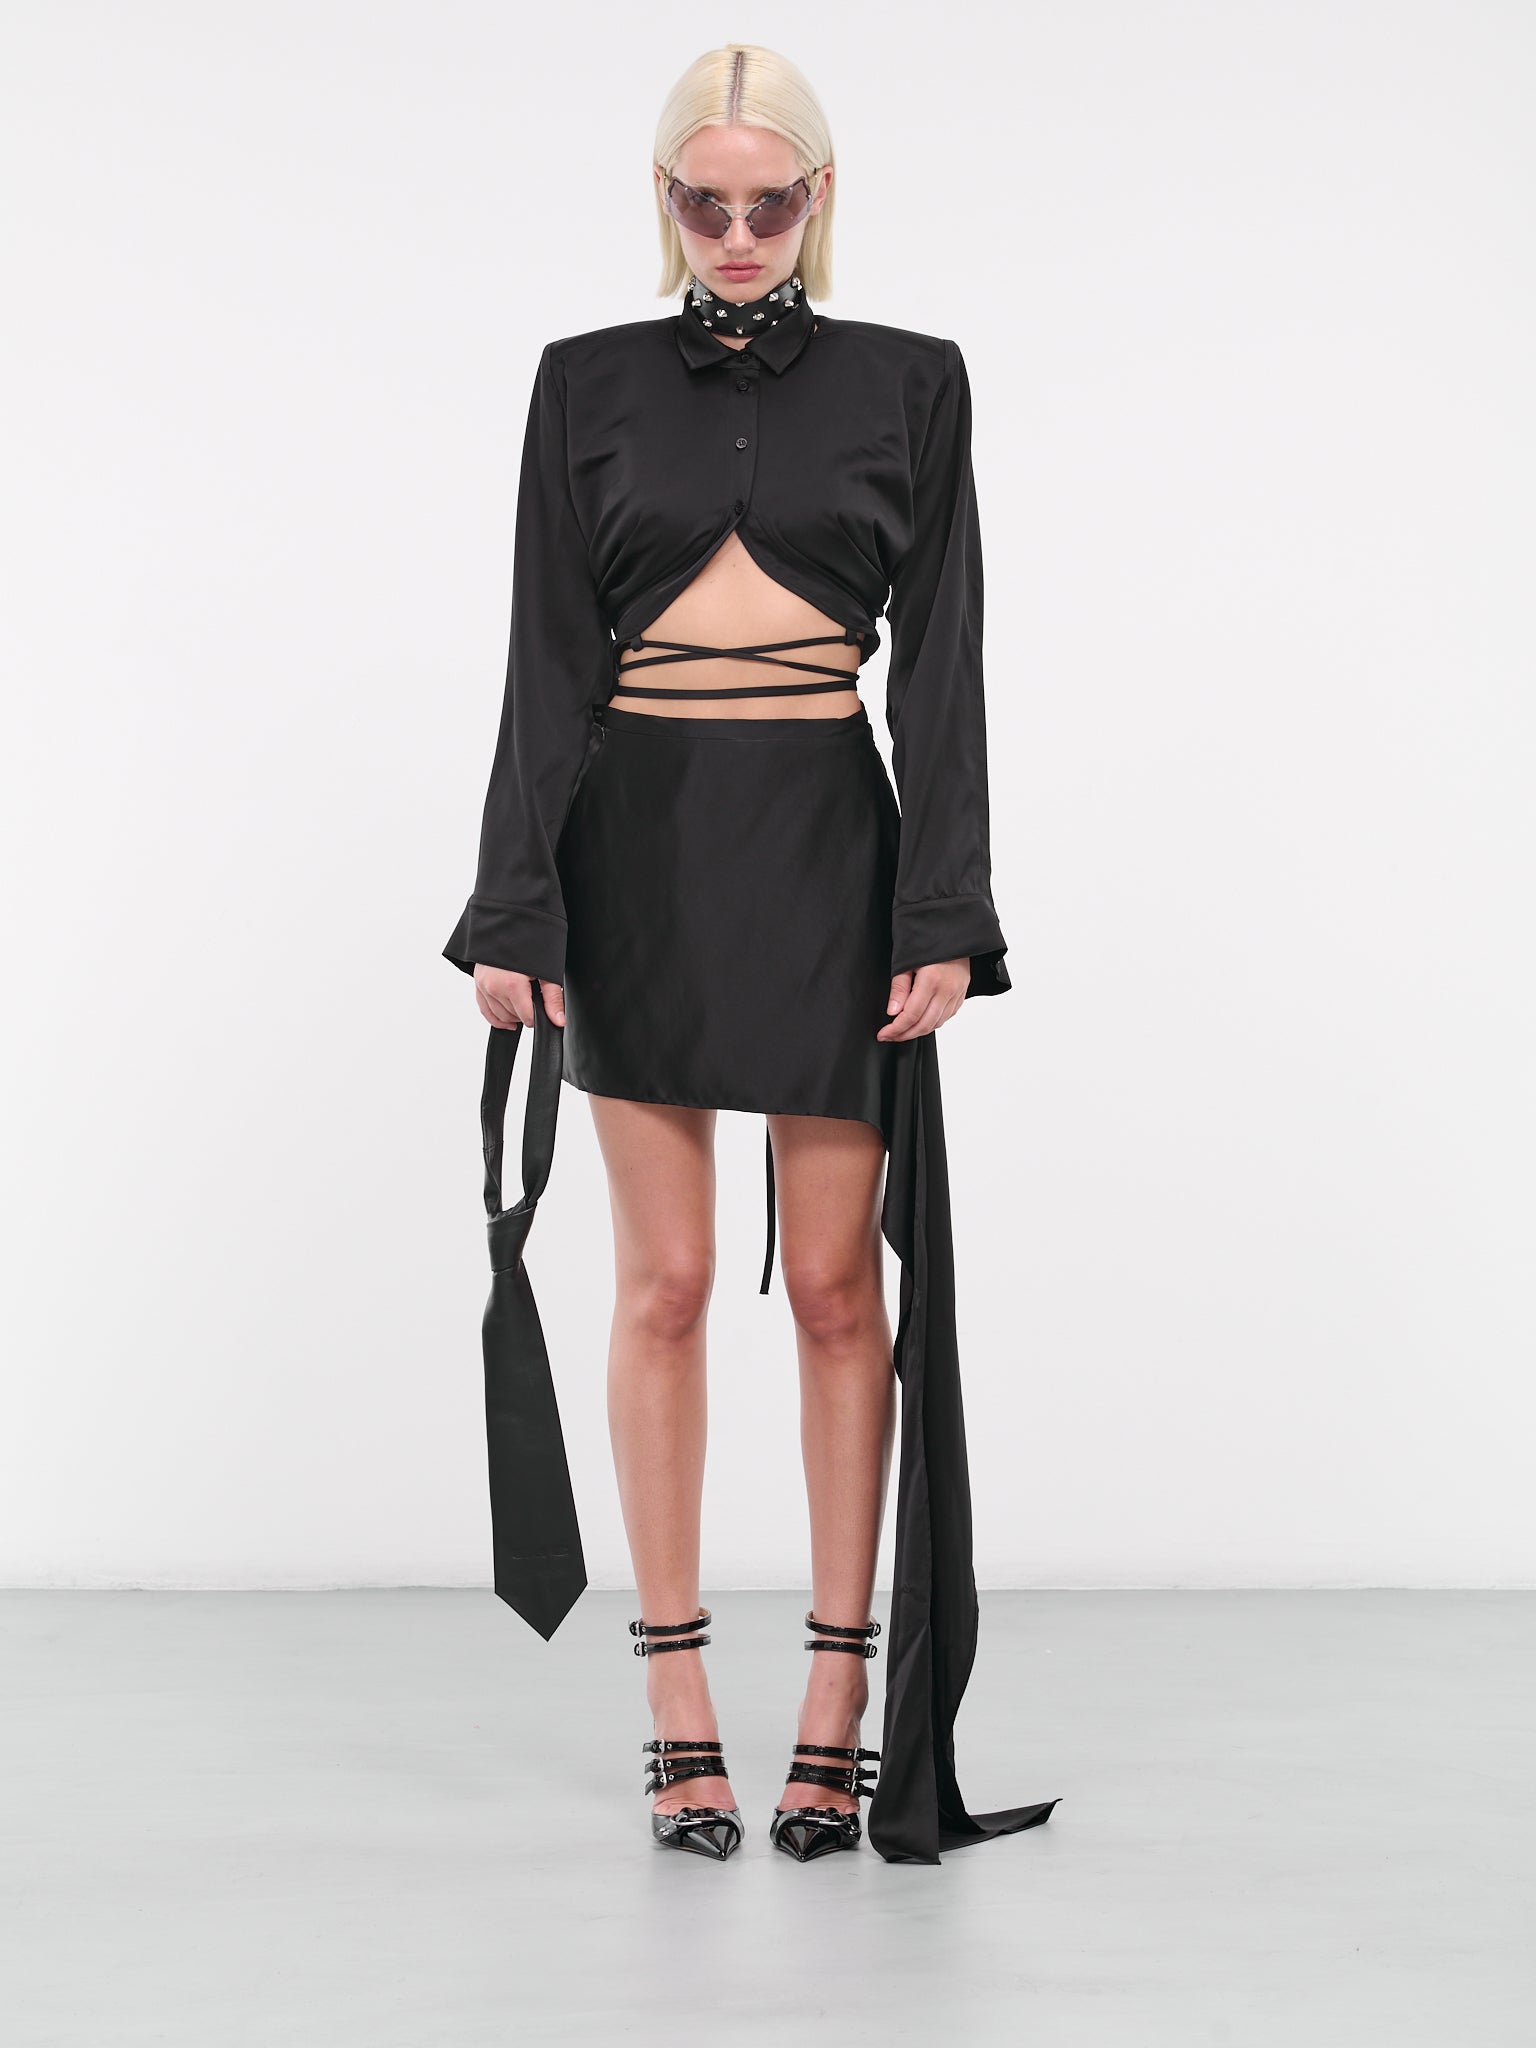 Apron Skirt (111-309-BLACK)